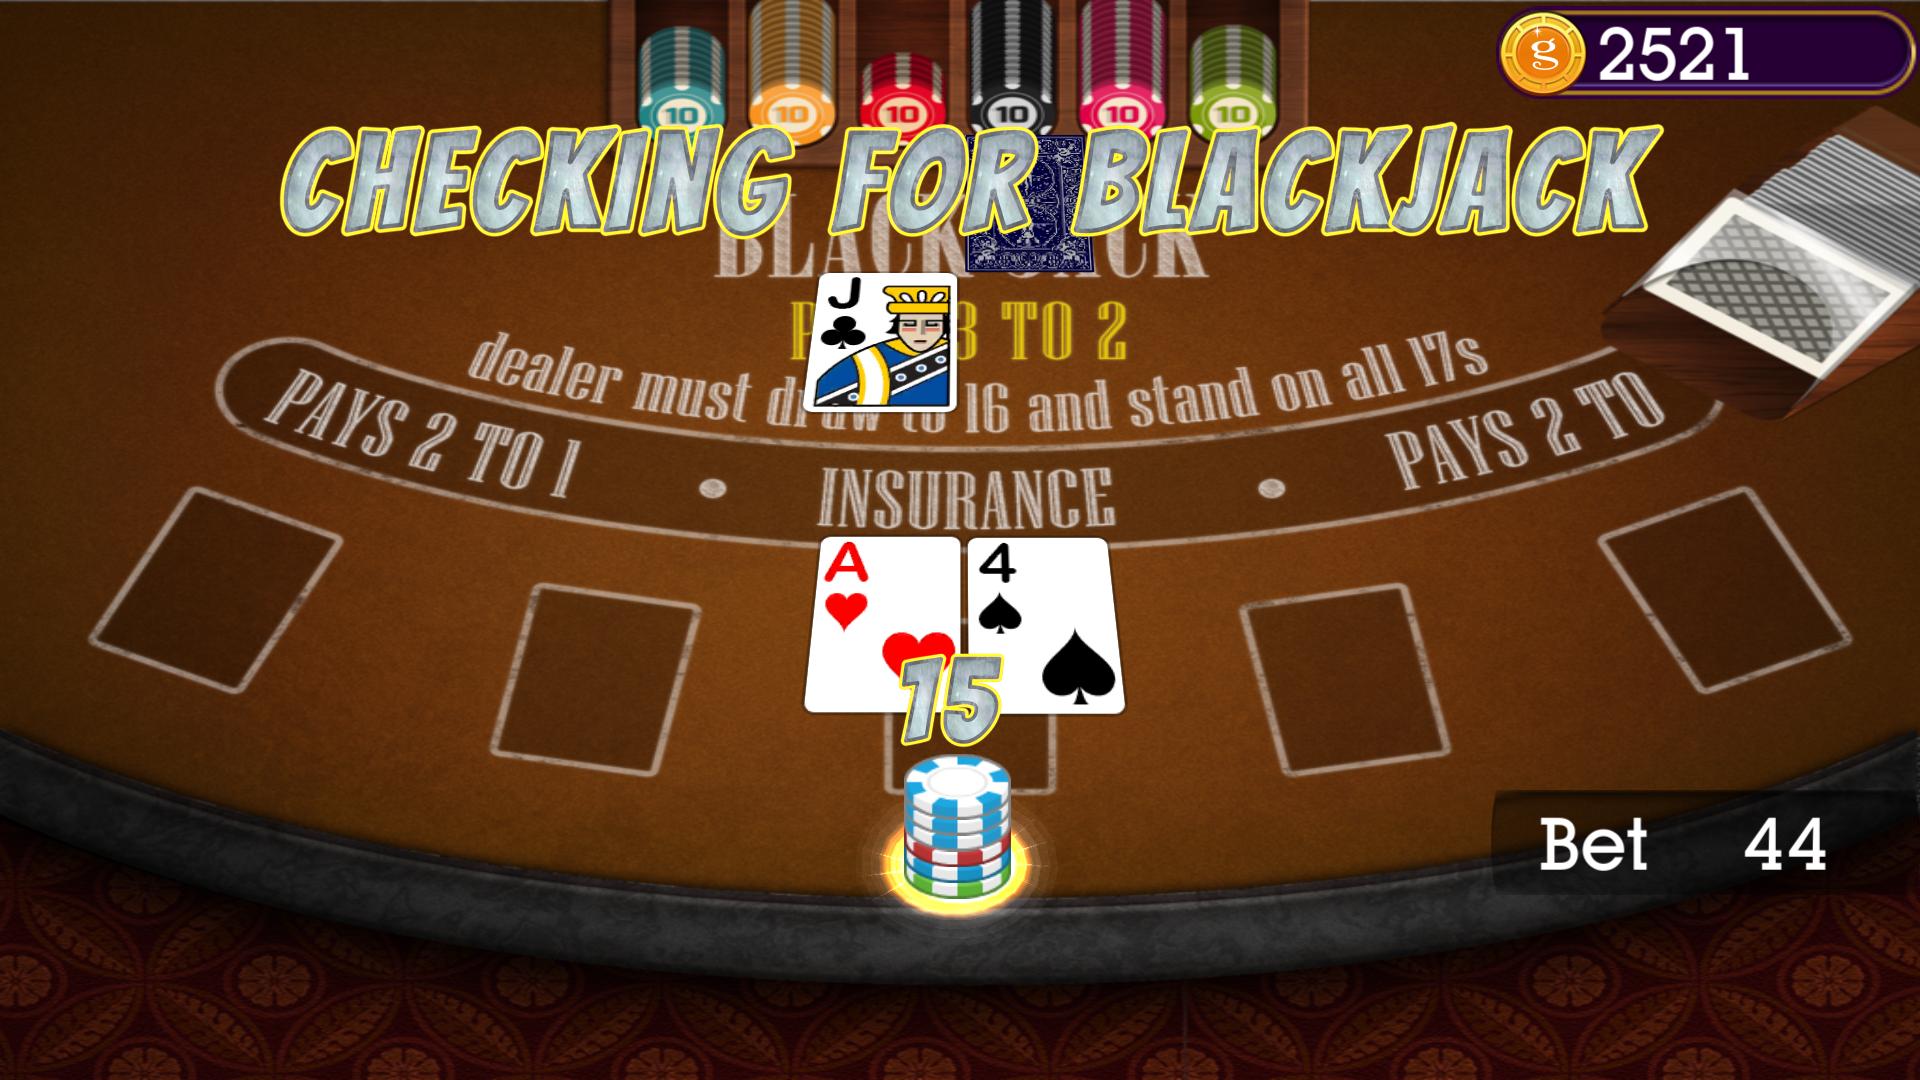 Casino Blackjack For Android Apk Download - como conseguir robux gratis en juegos stand casino